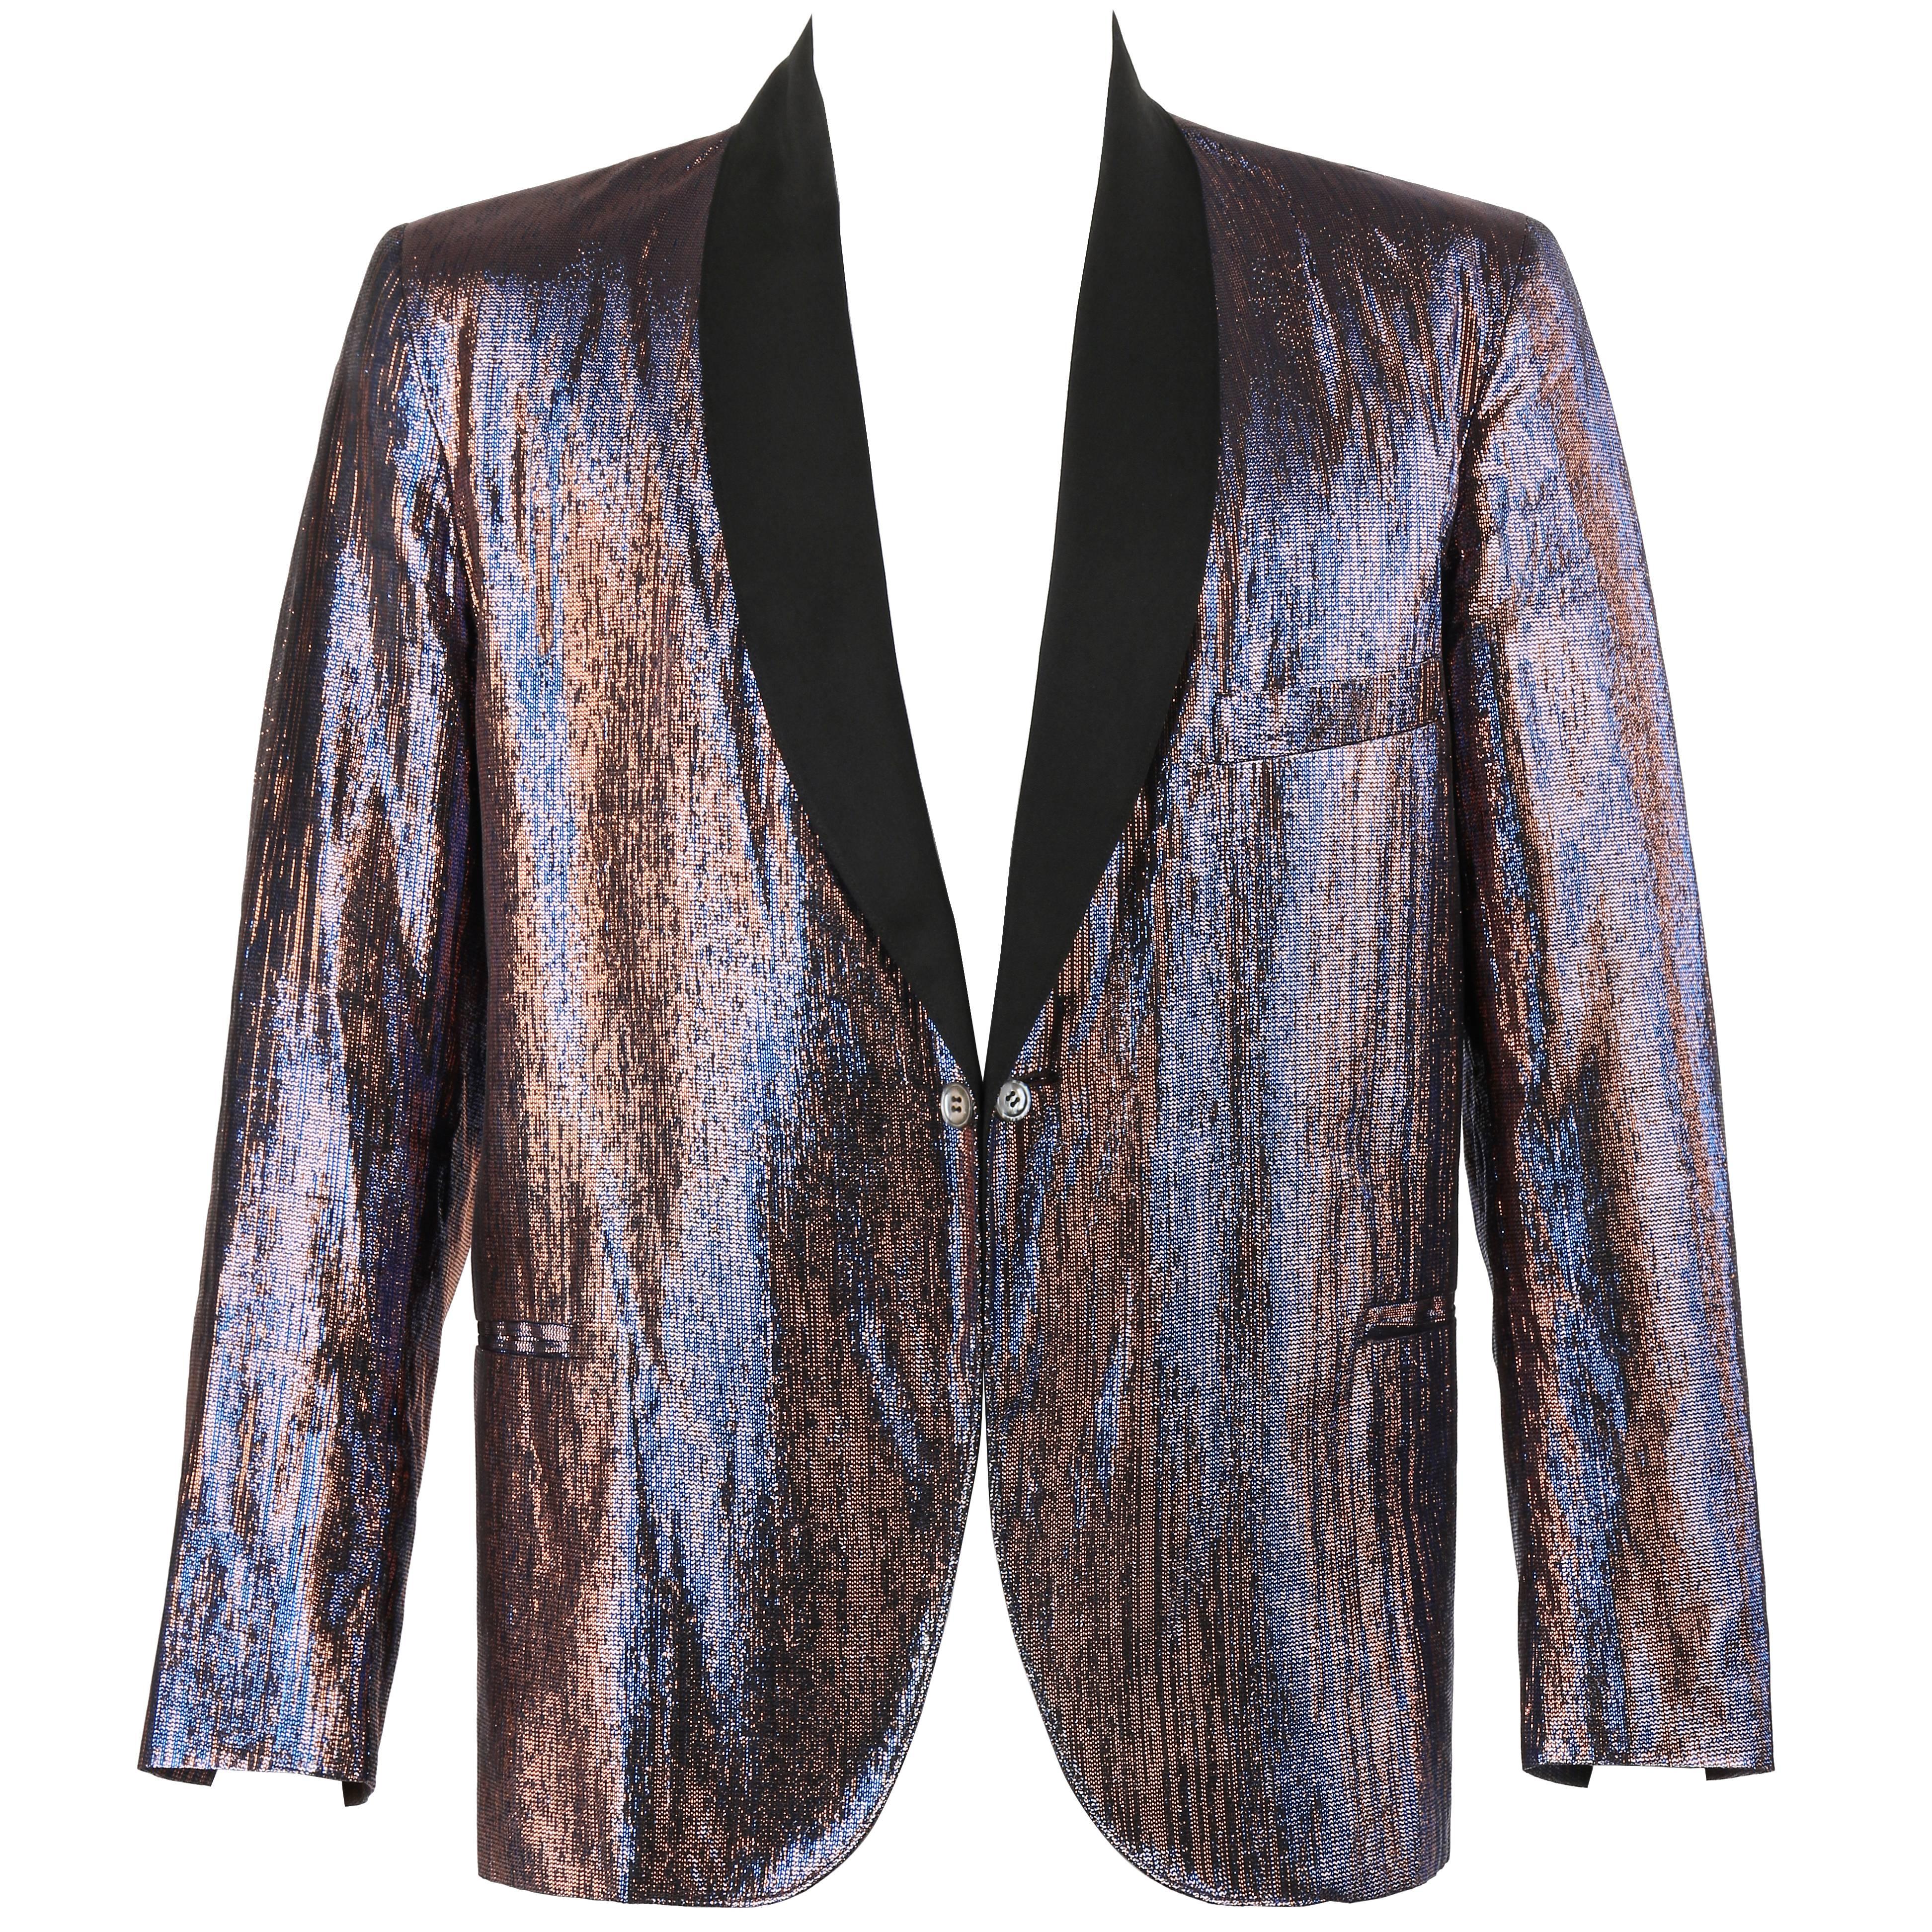 TOWNCRAFT CLOTHES c.1960's Iridescent Metallic Lame Tuxedo Smoking Jacket